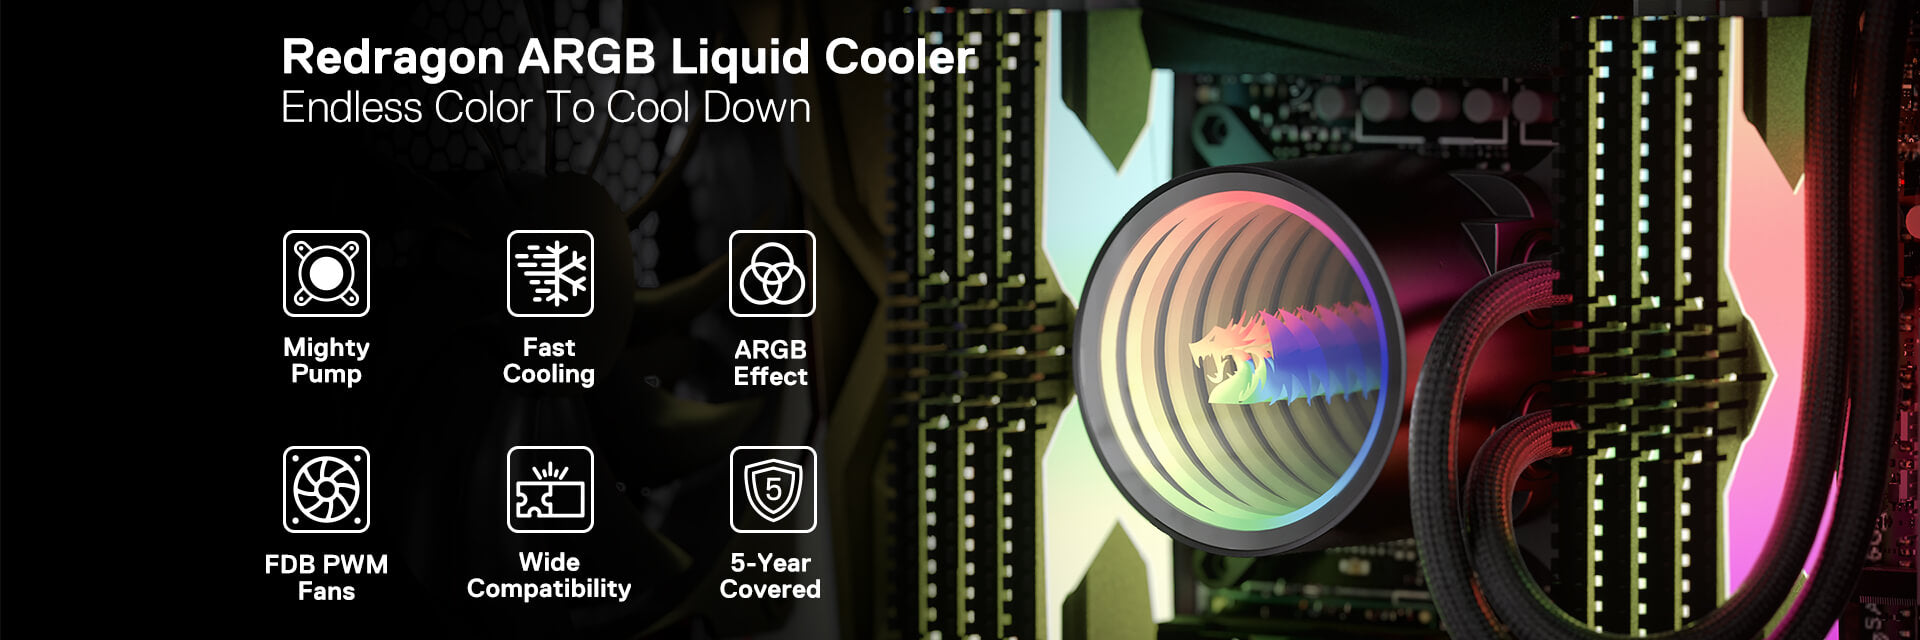 Redragon HL360 ARGB Liquid Cooling System, CPU Water Cooler w/ 3300 RPM High-Efficiency Radiator